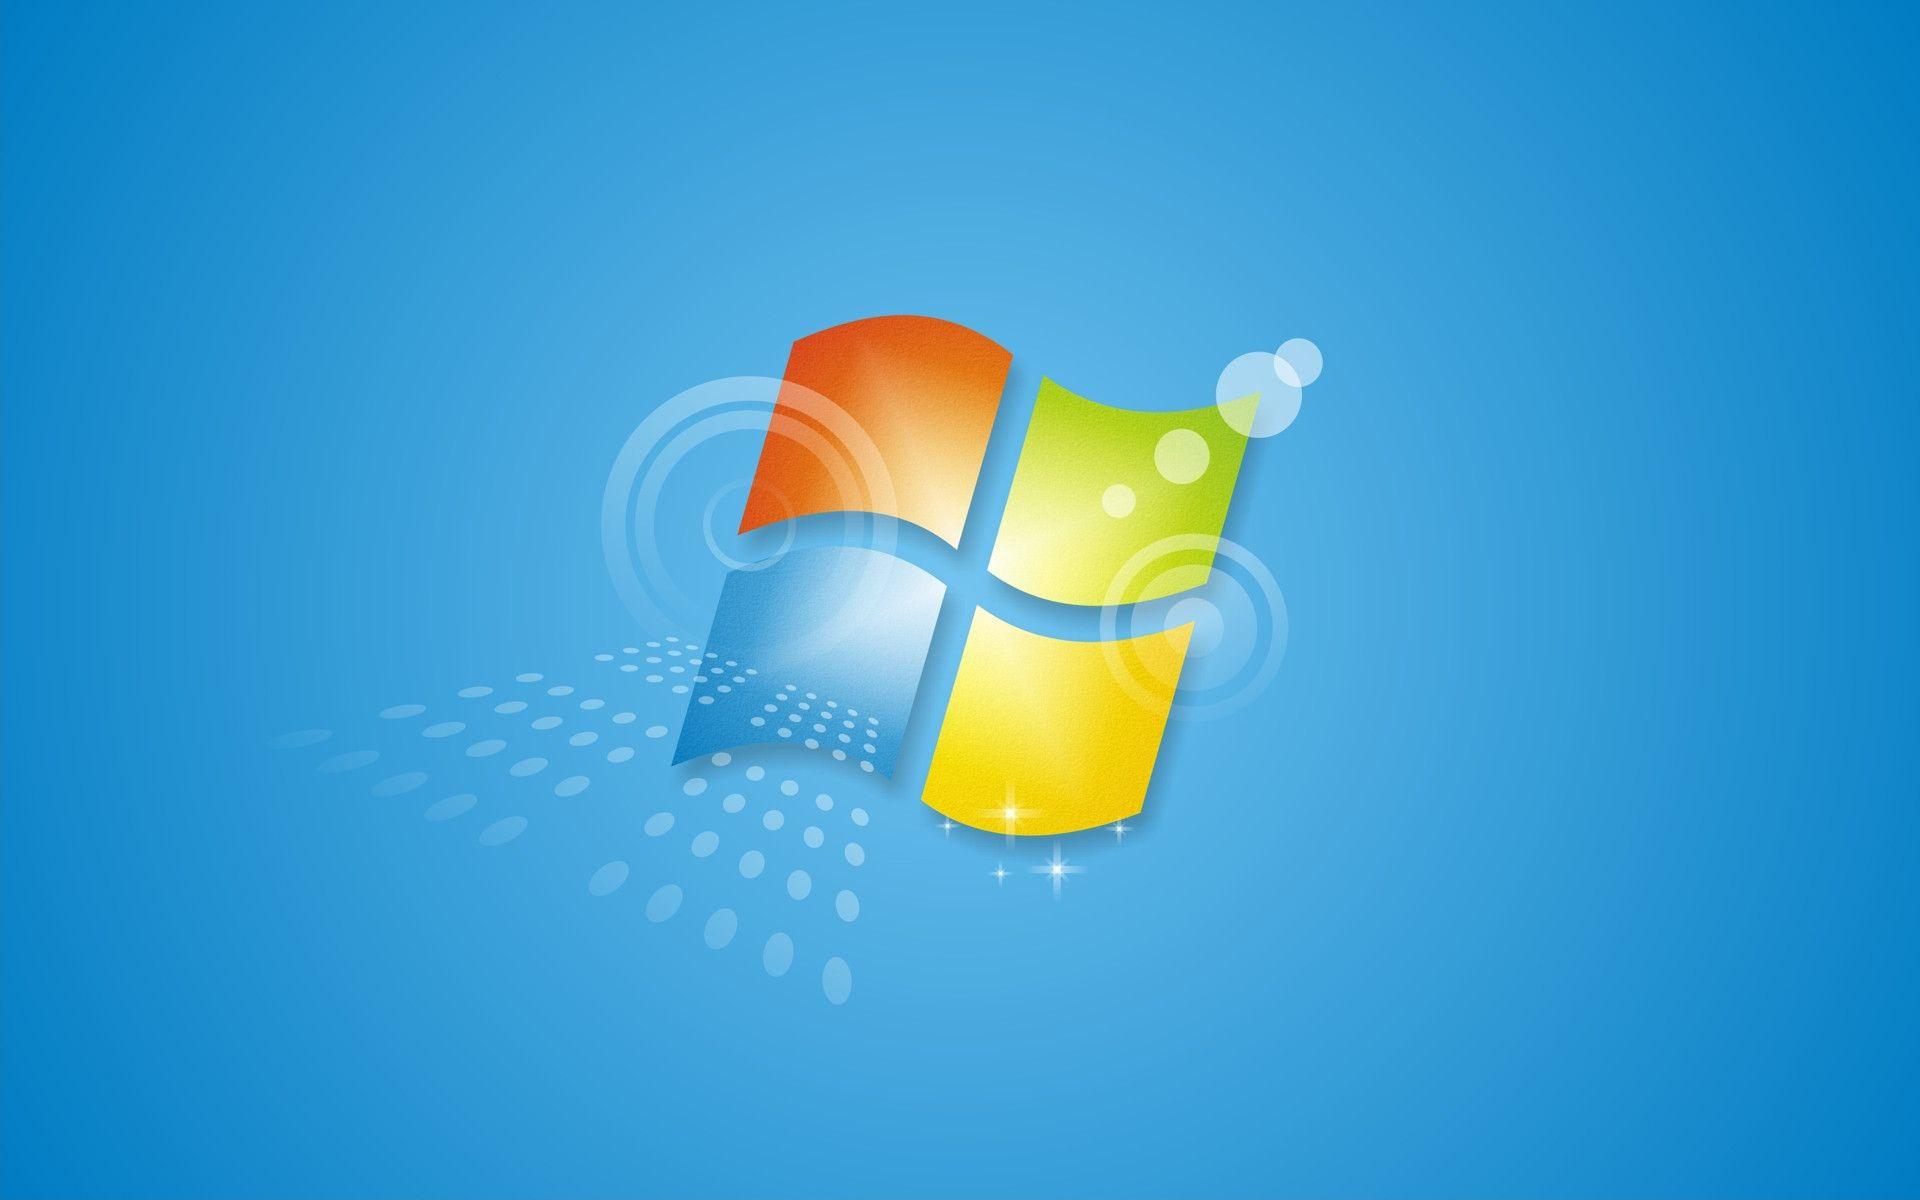 Windows 7 Blue Backgrounds - Wallpaper Cave